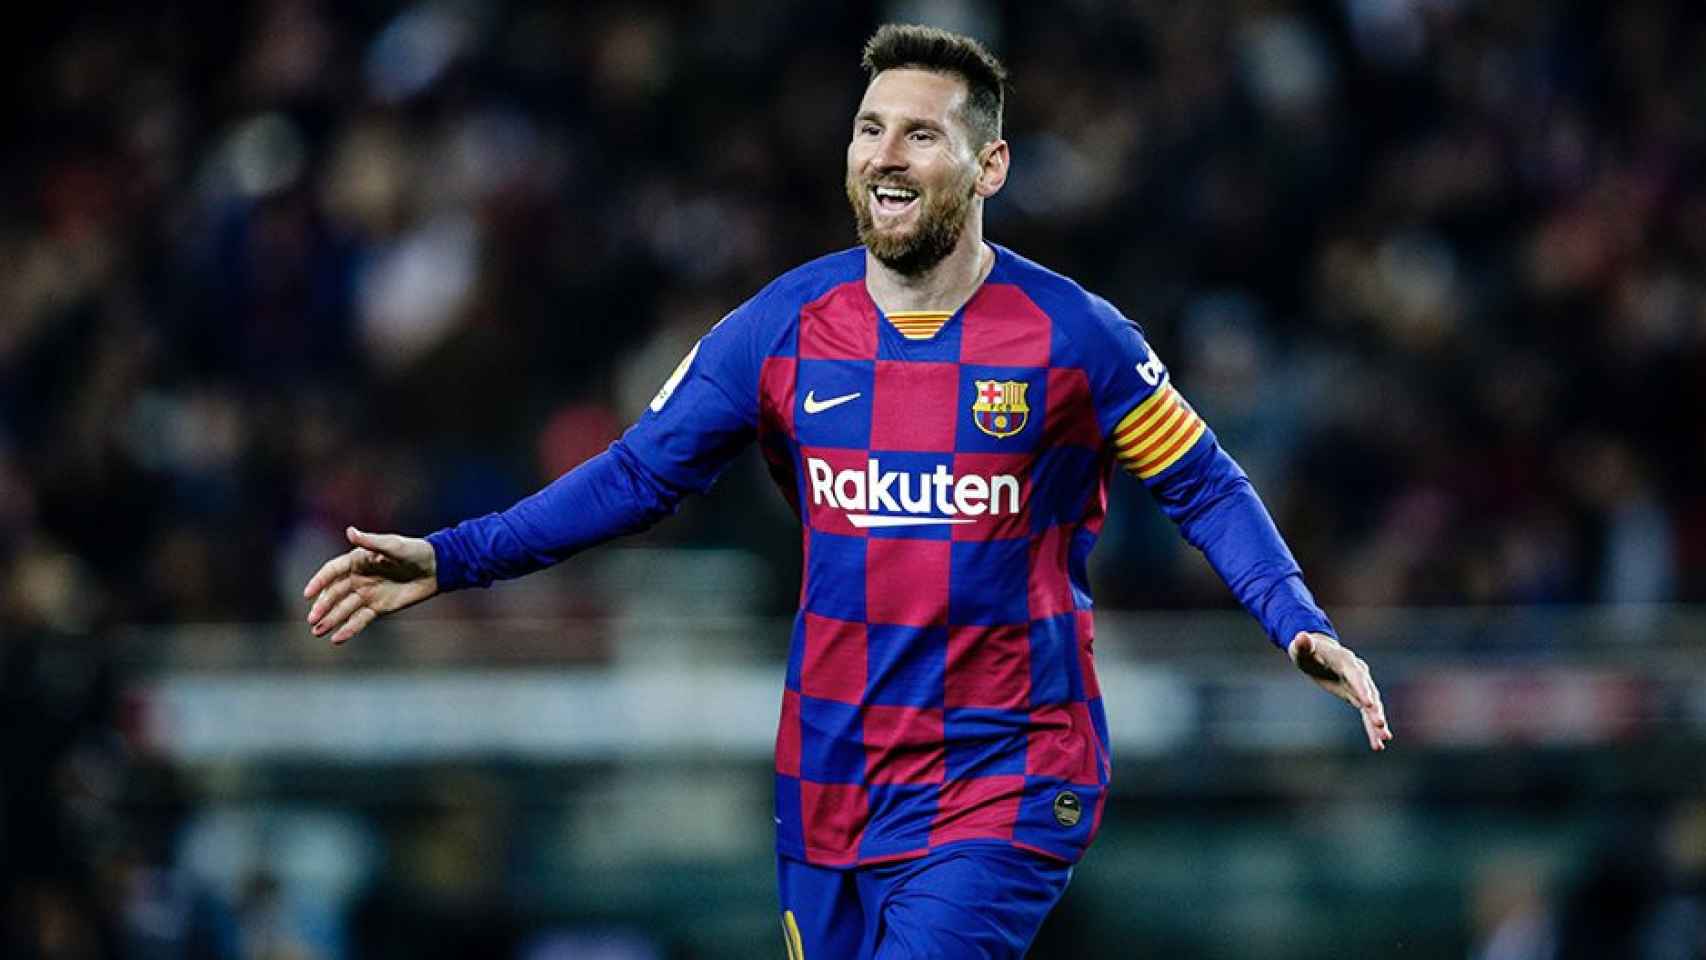 Messi celebra un gol con el Barça